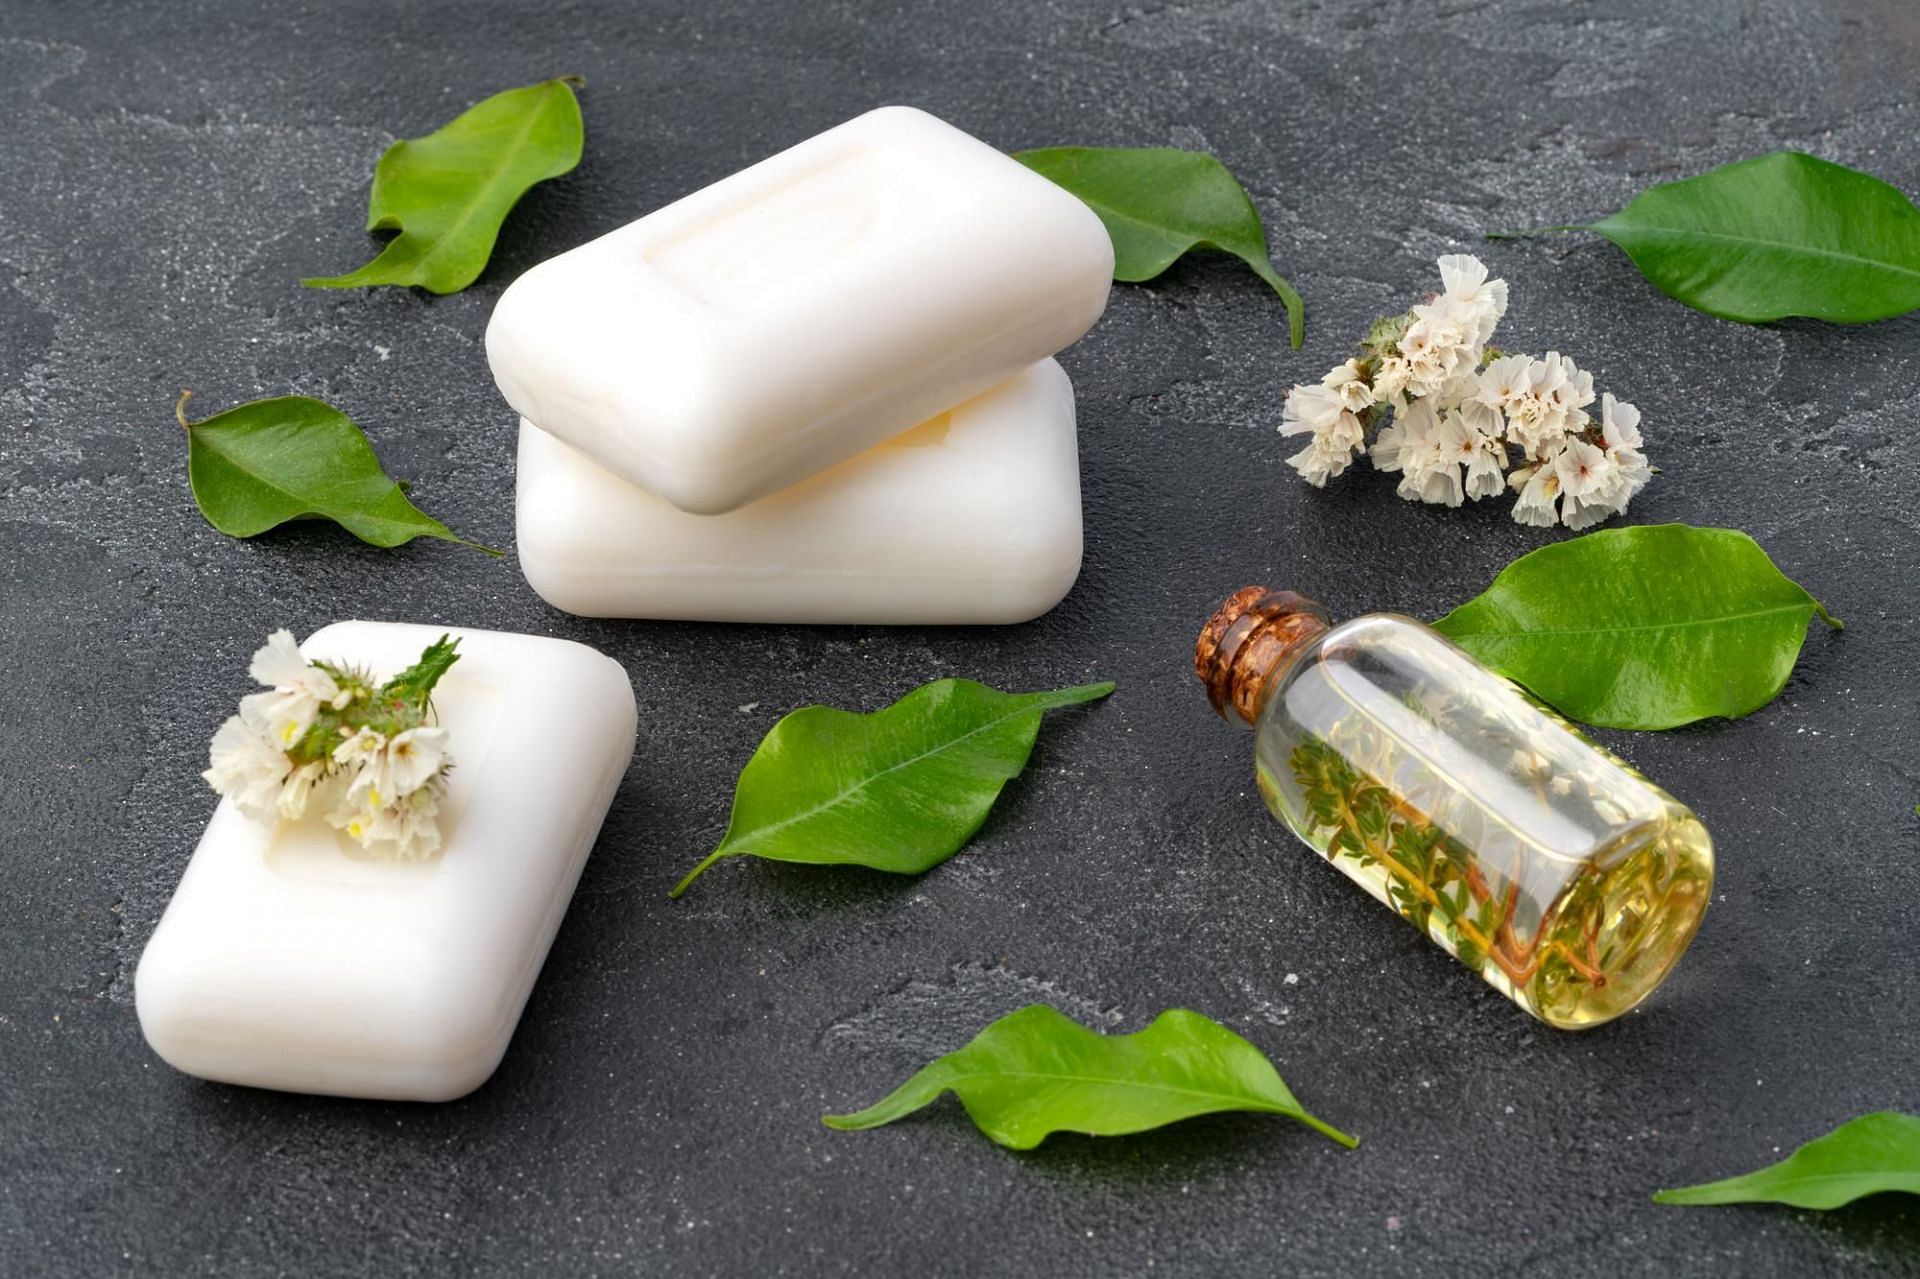 This soap bar has natural oils (Image by fabrikasimf on Freepik)